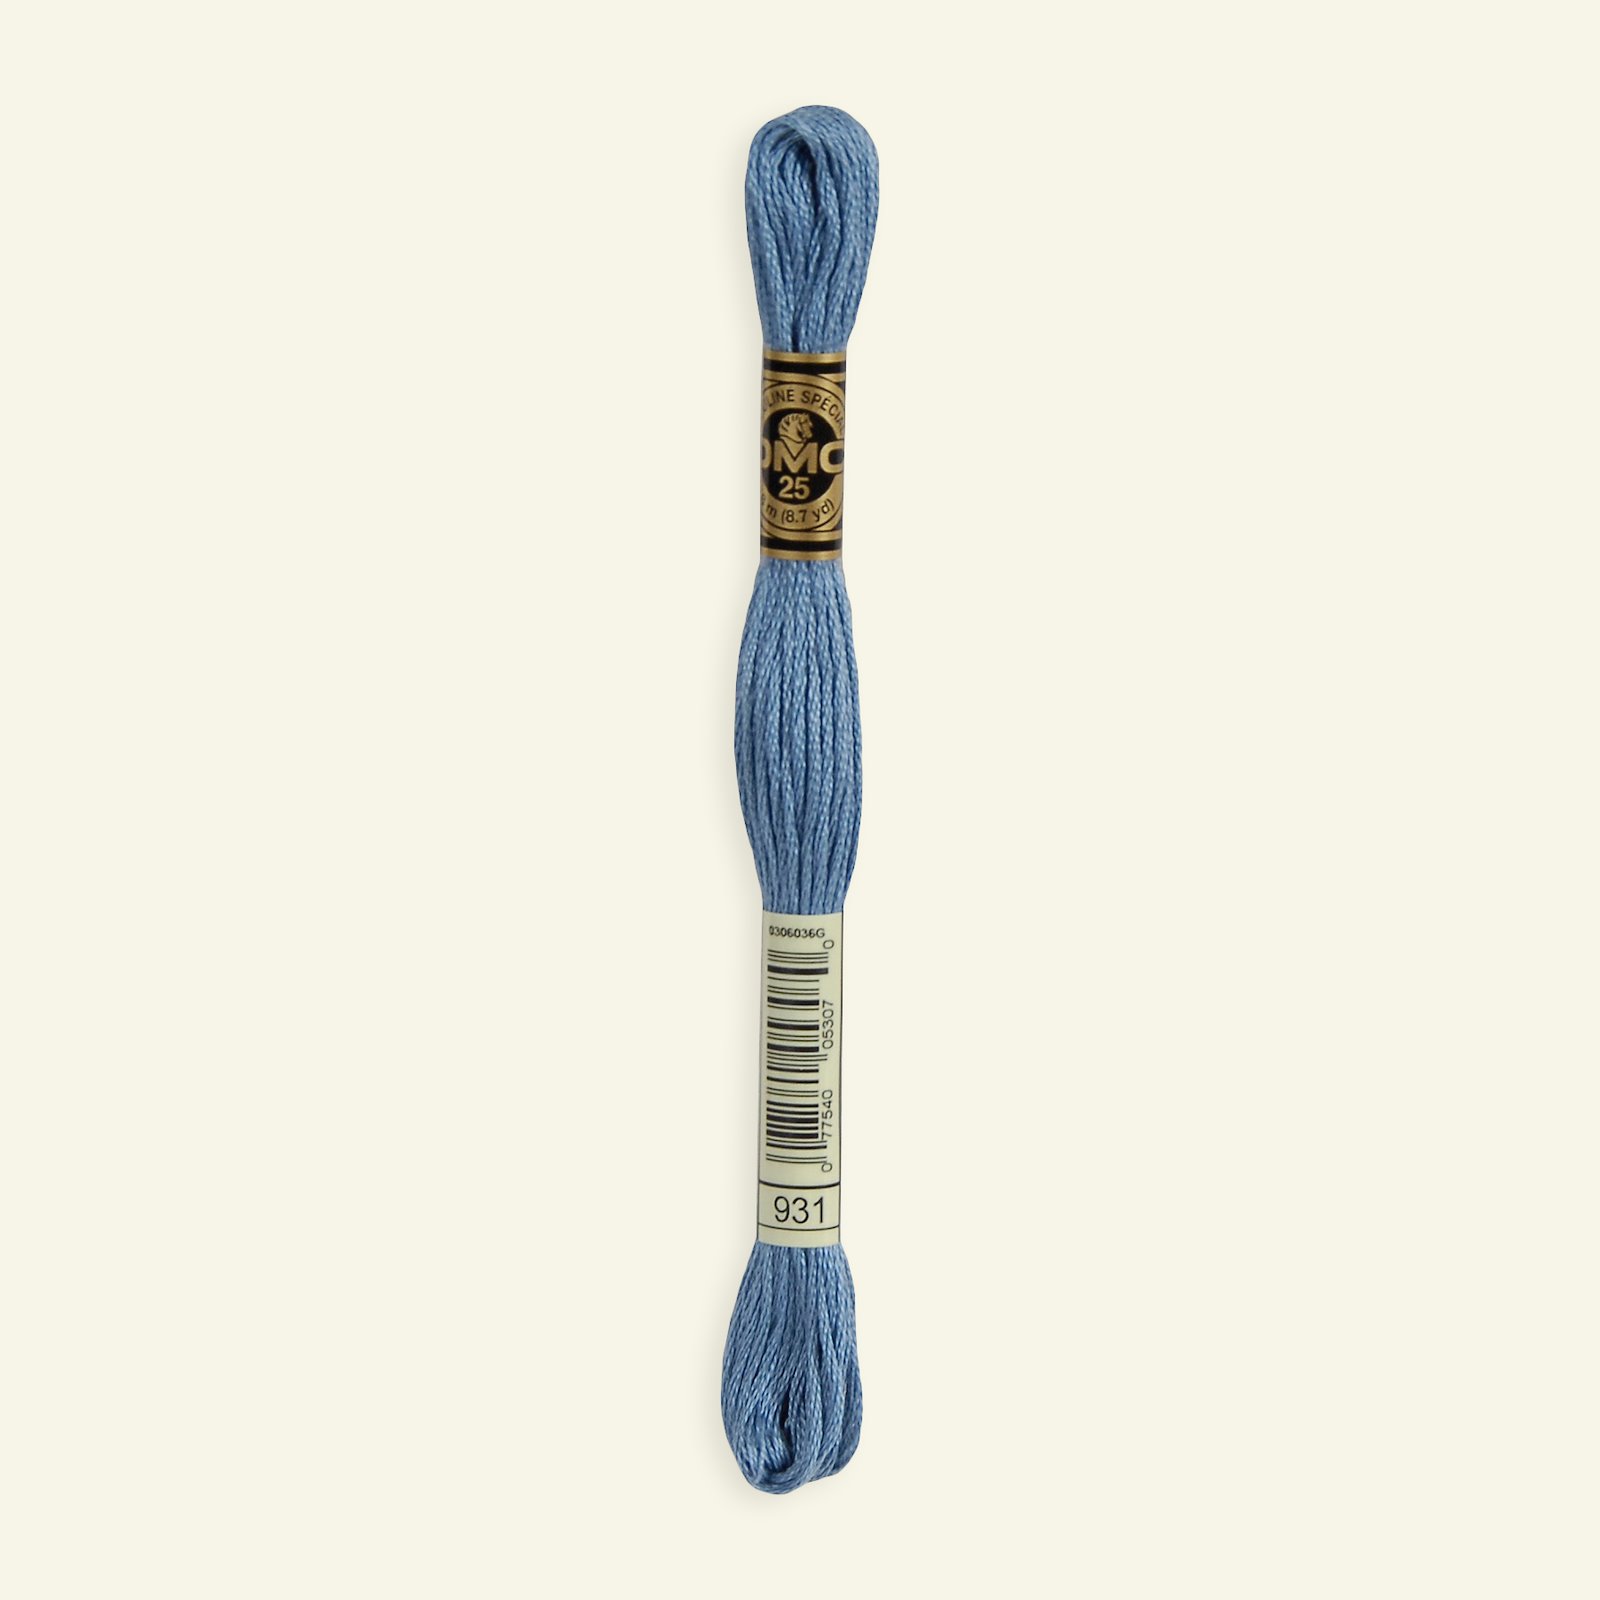 The Urban Store Embroidery Thread Medium Antique Blue DMC 977 RRP £1.40 CLEARANCE XL 99p